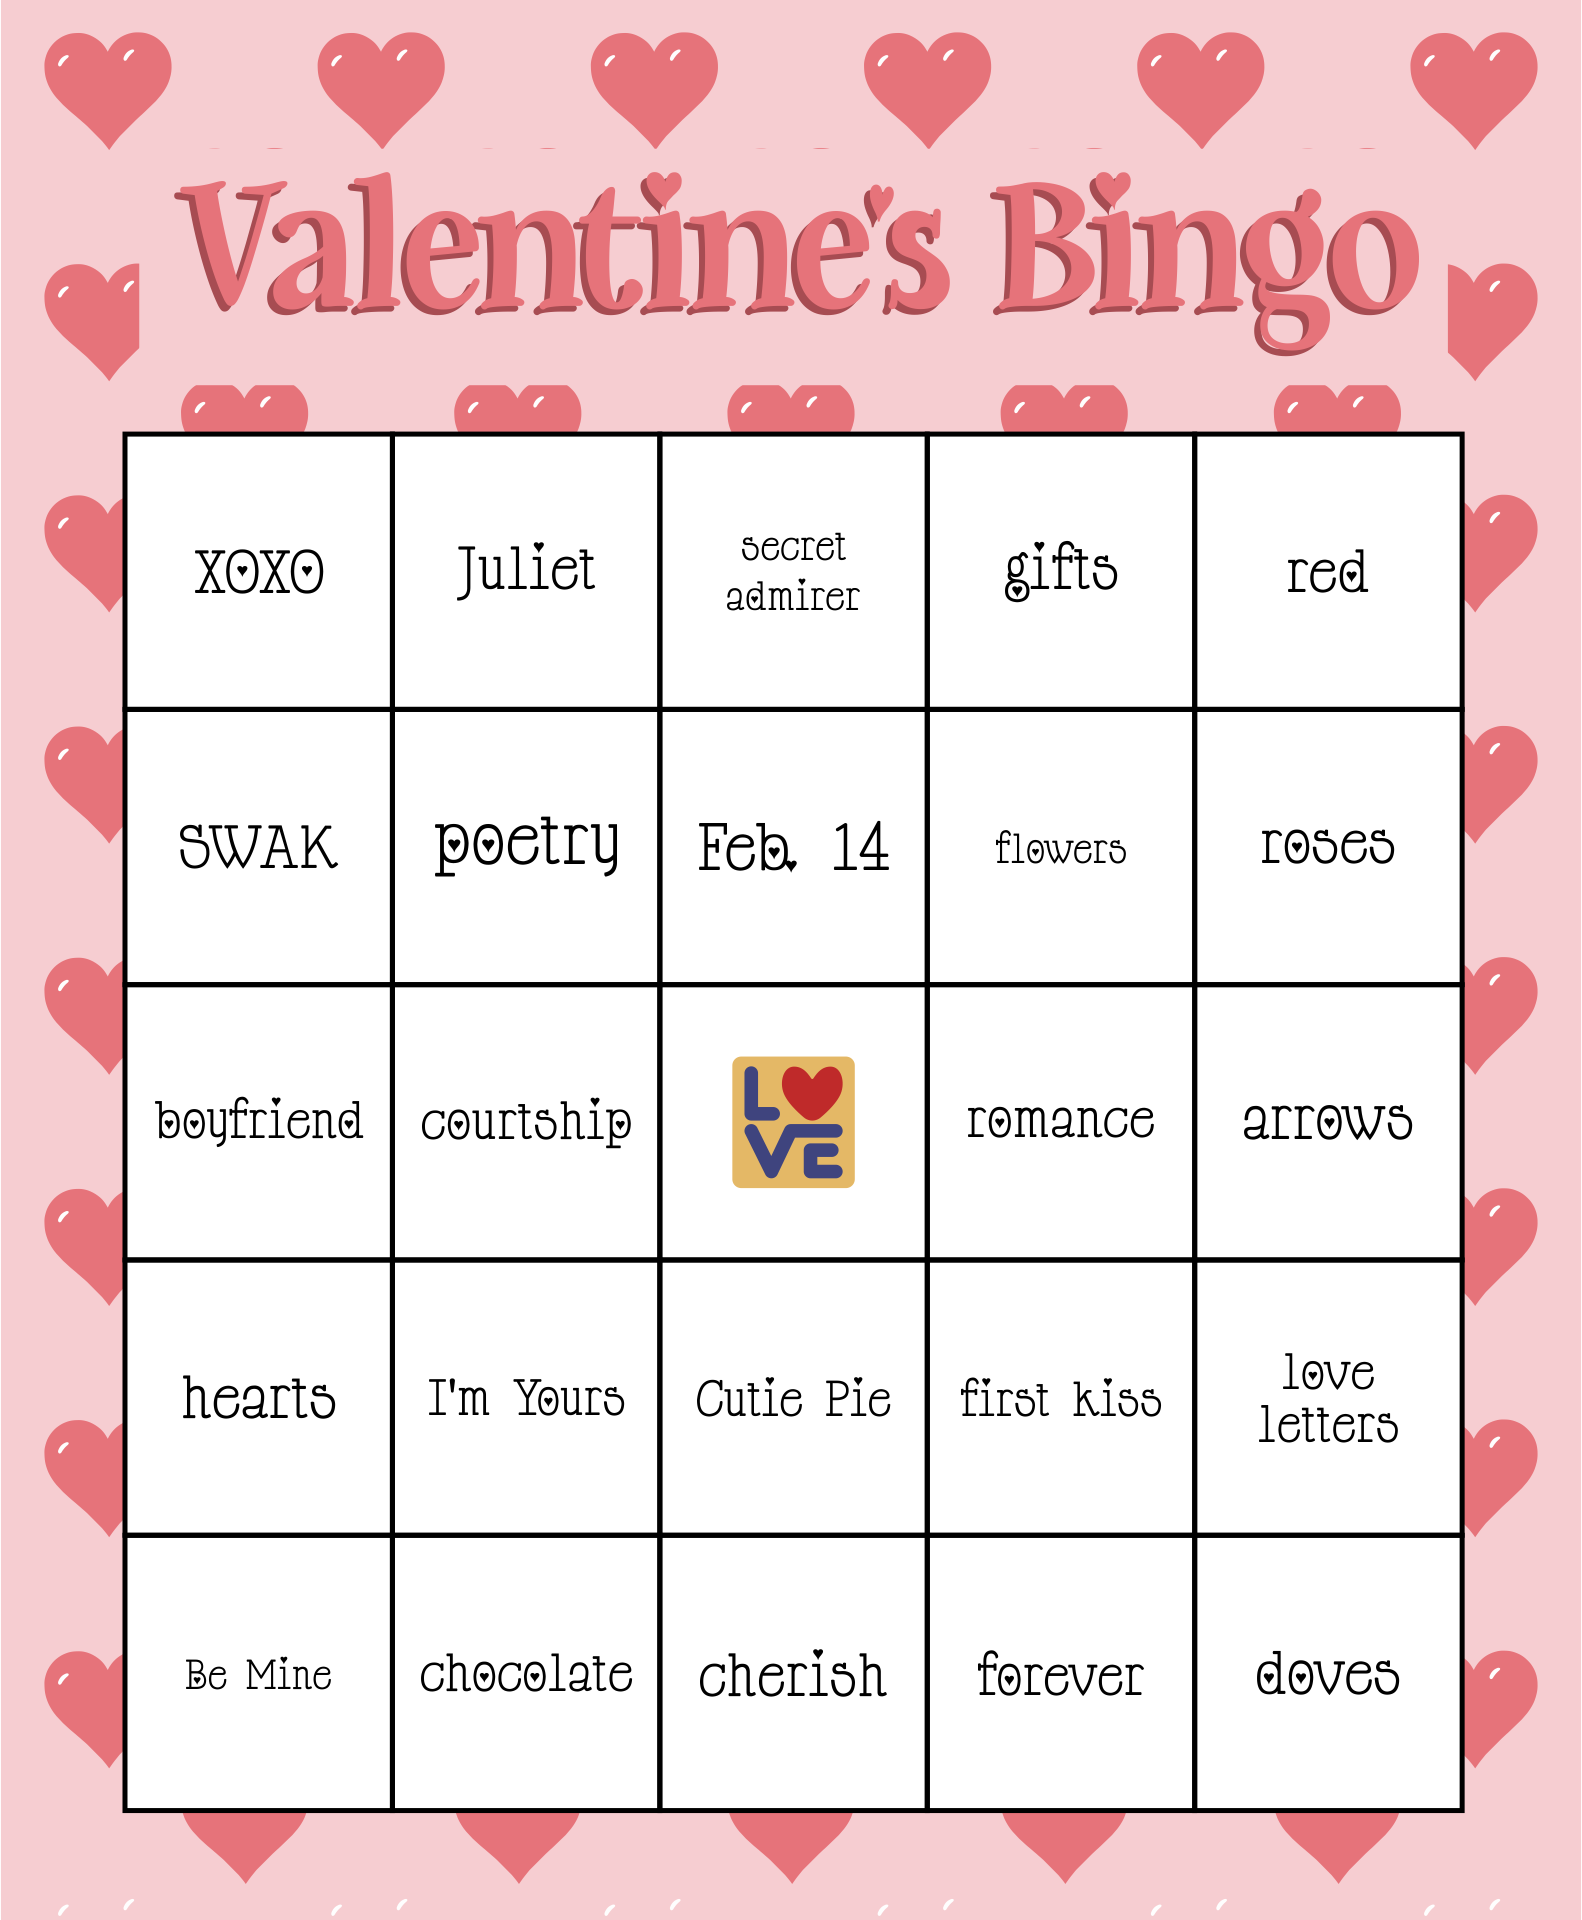 Valentines Day Bingo Cards